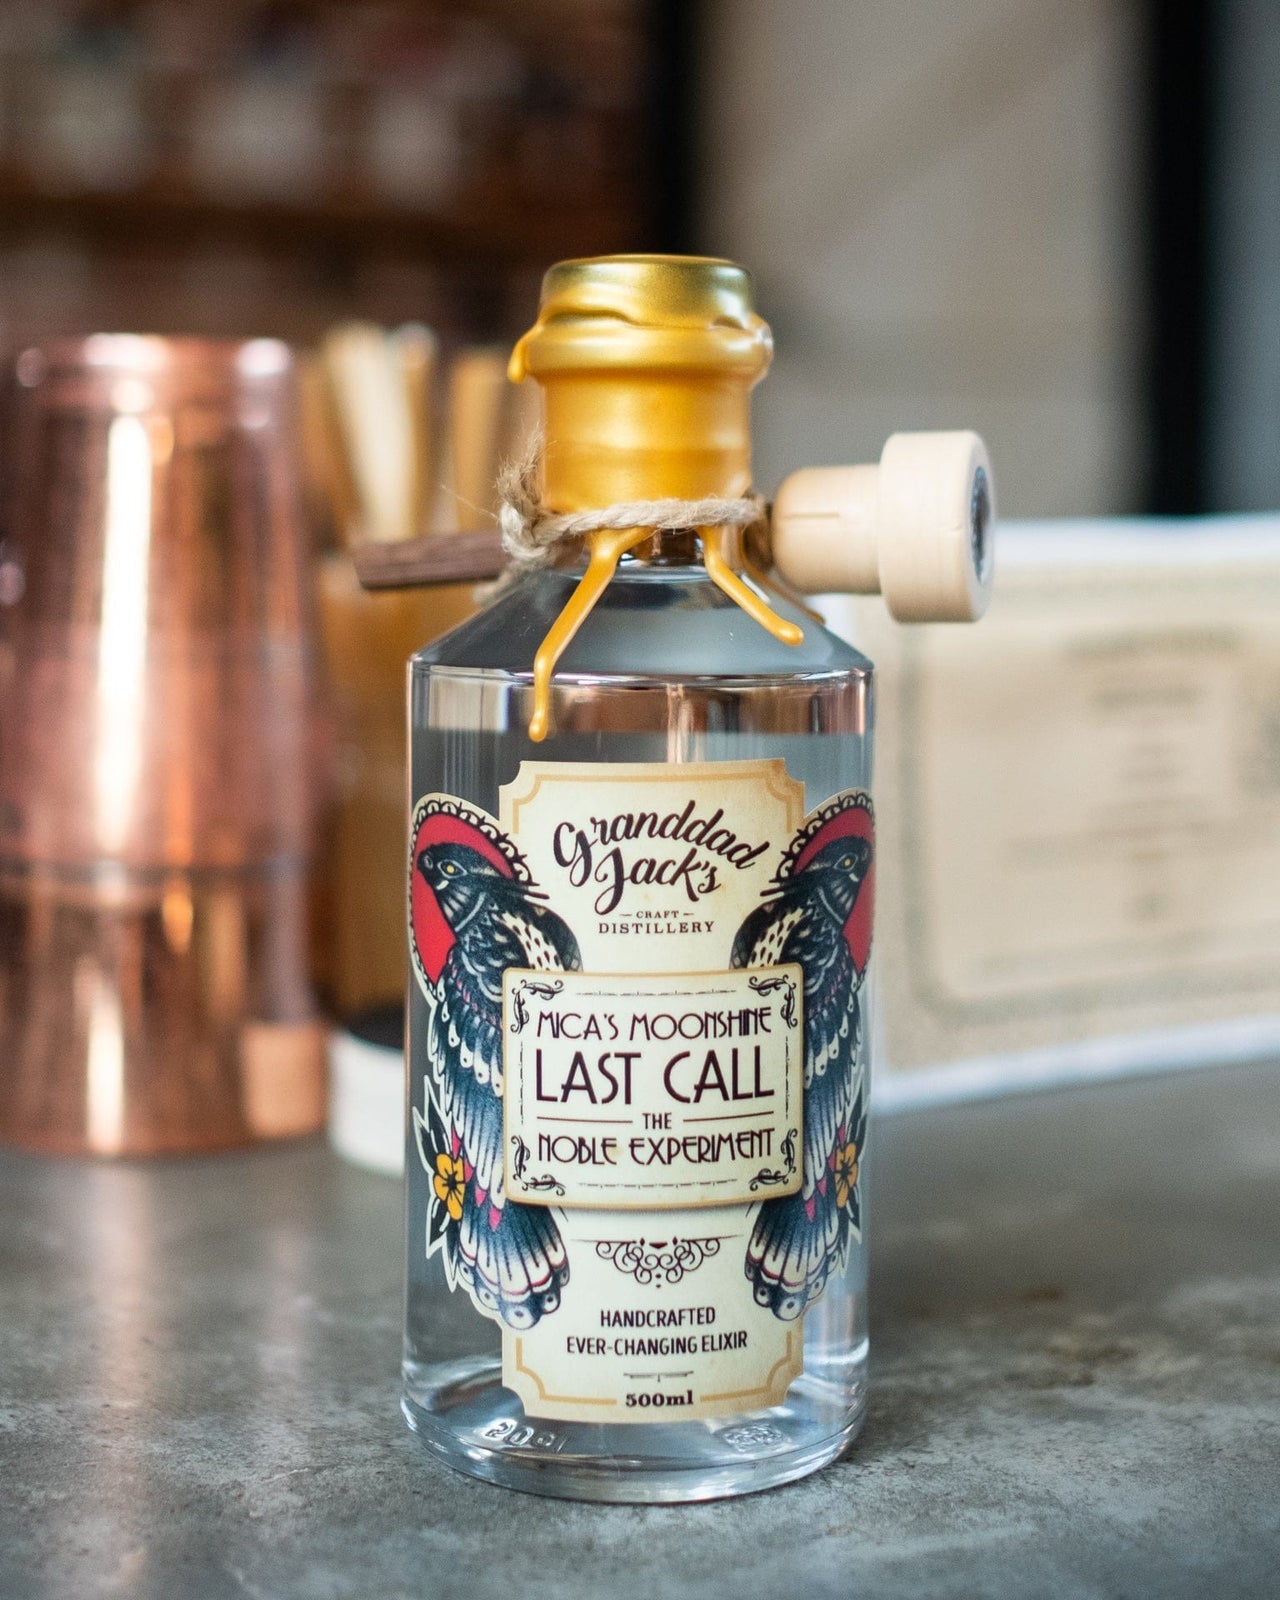 Granddad Jacks Craft Distillery Mica's Moonshine (February 2020)